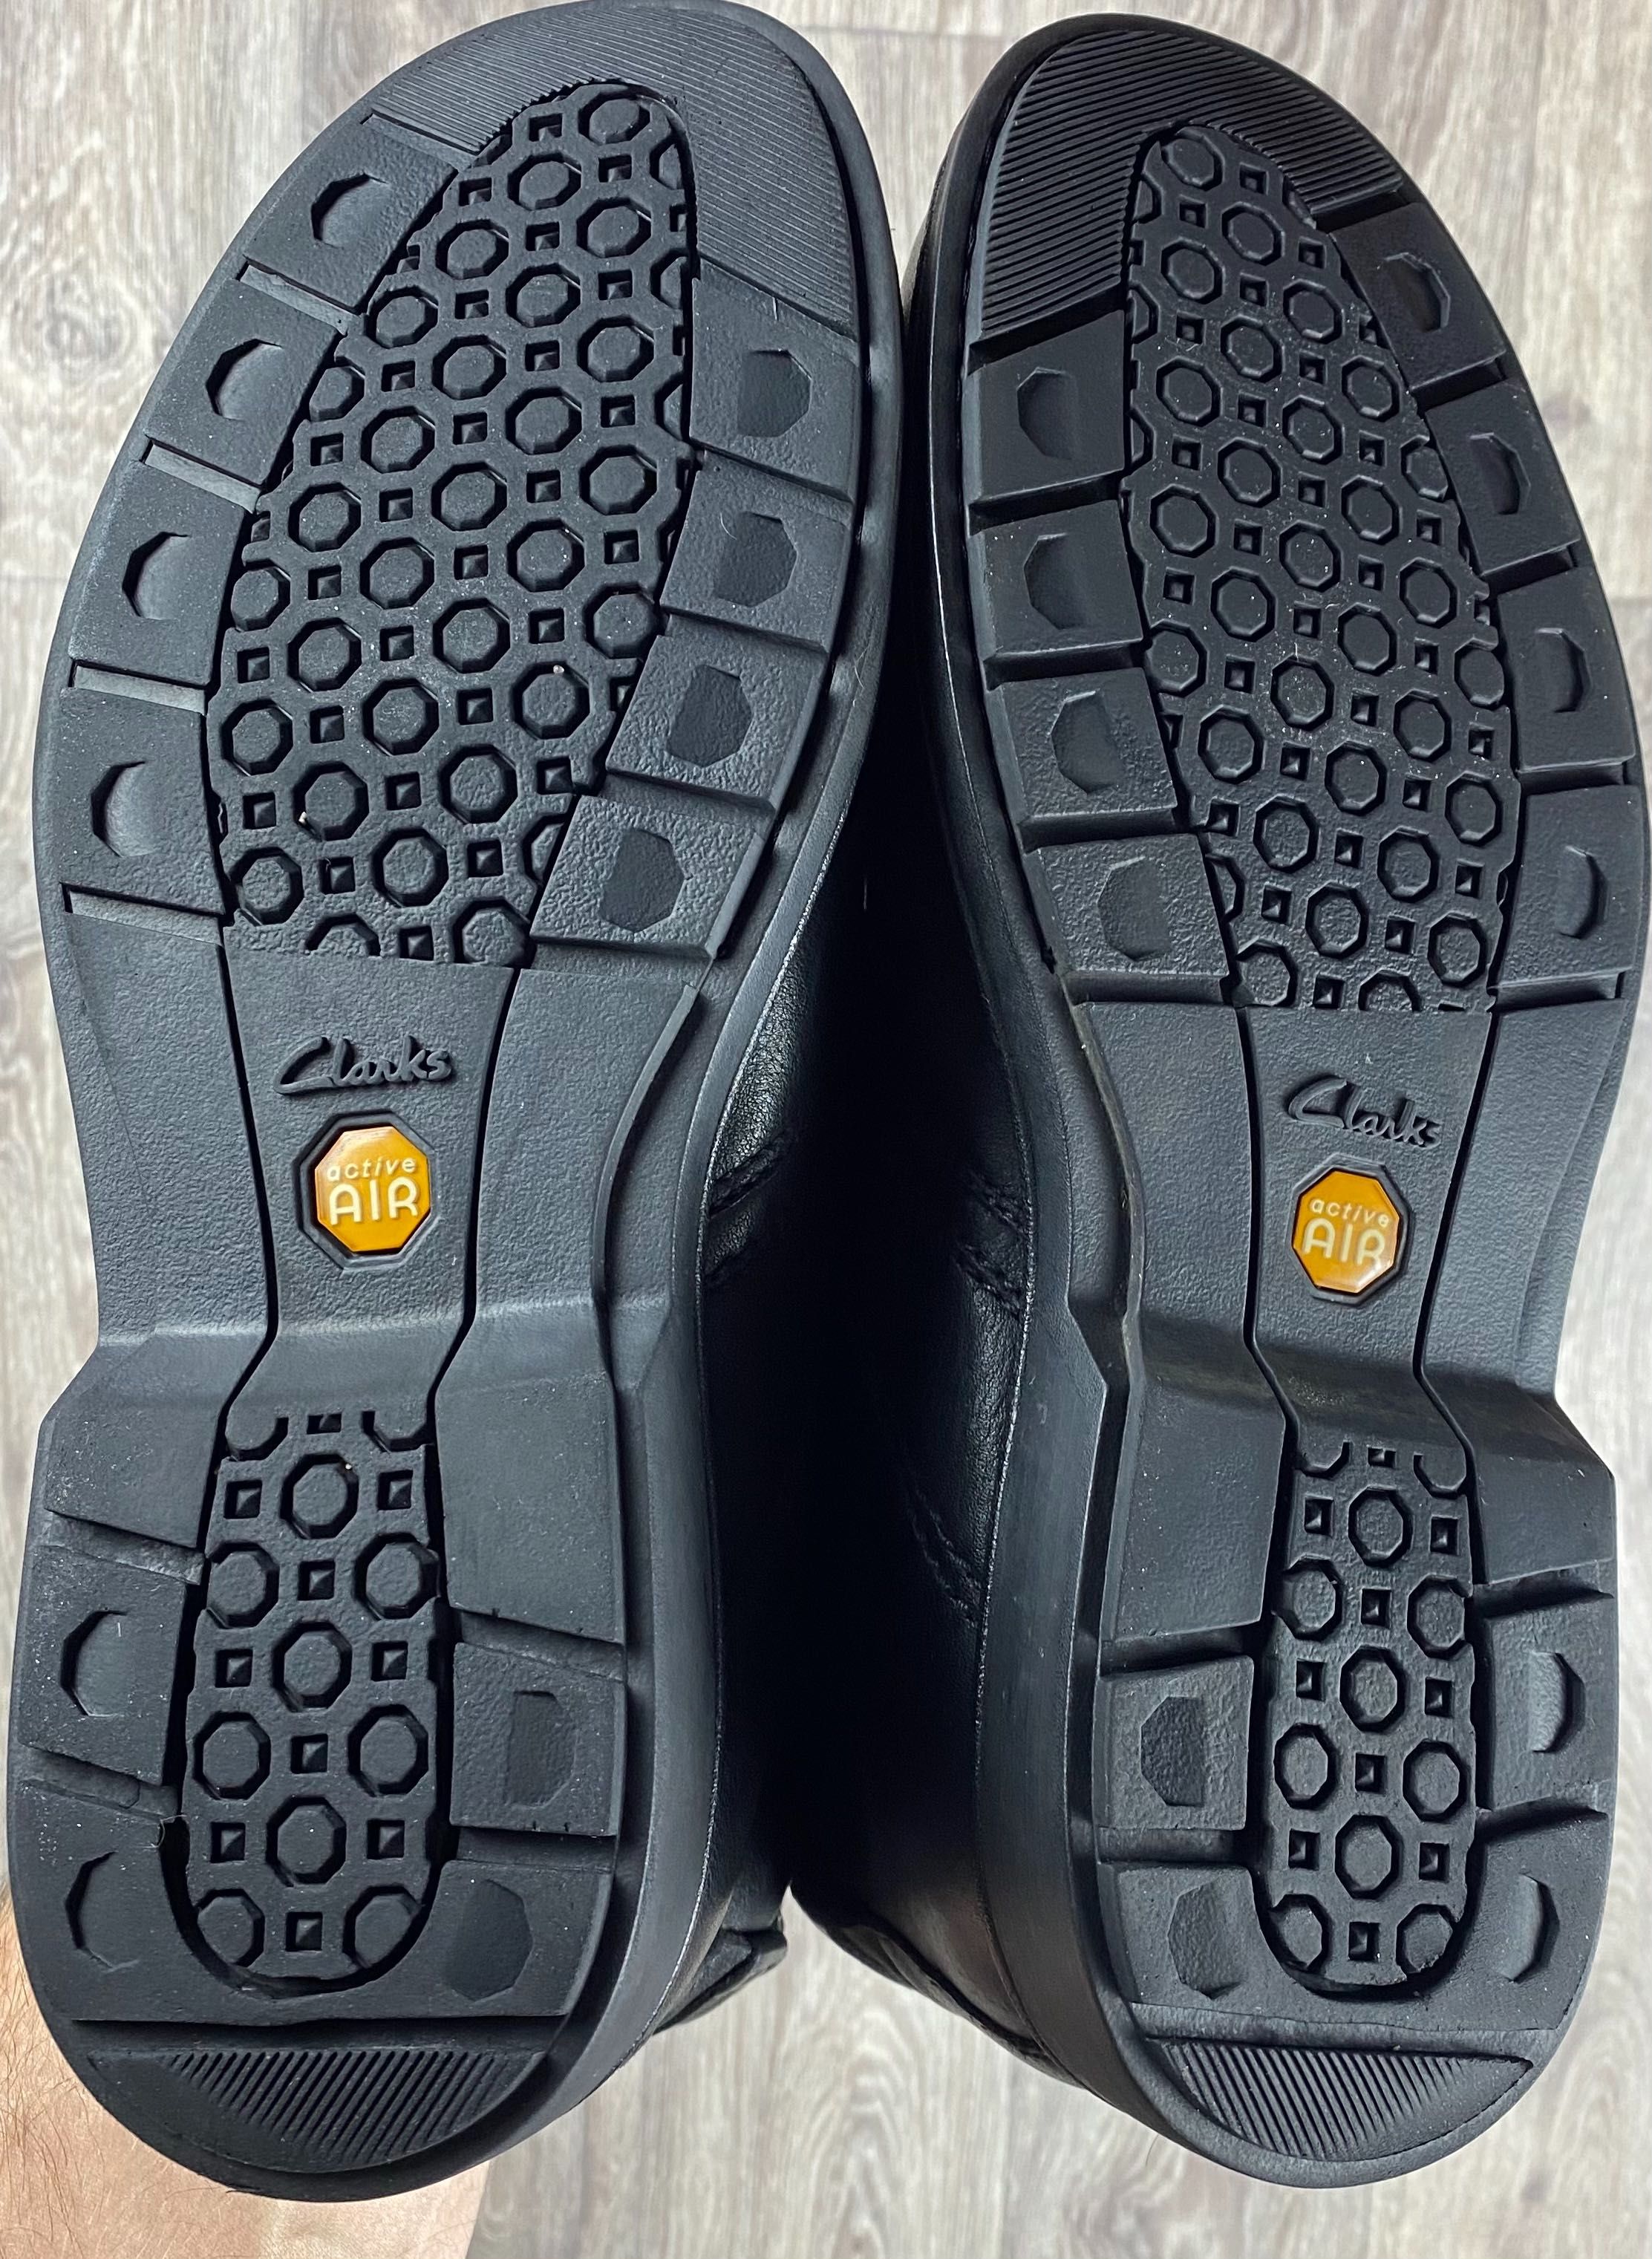 Clarks active air gore-tex ботинки 45 размер кожаные чёрные оригинал